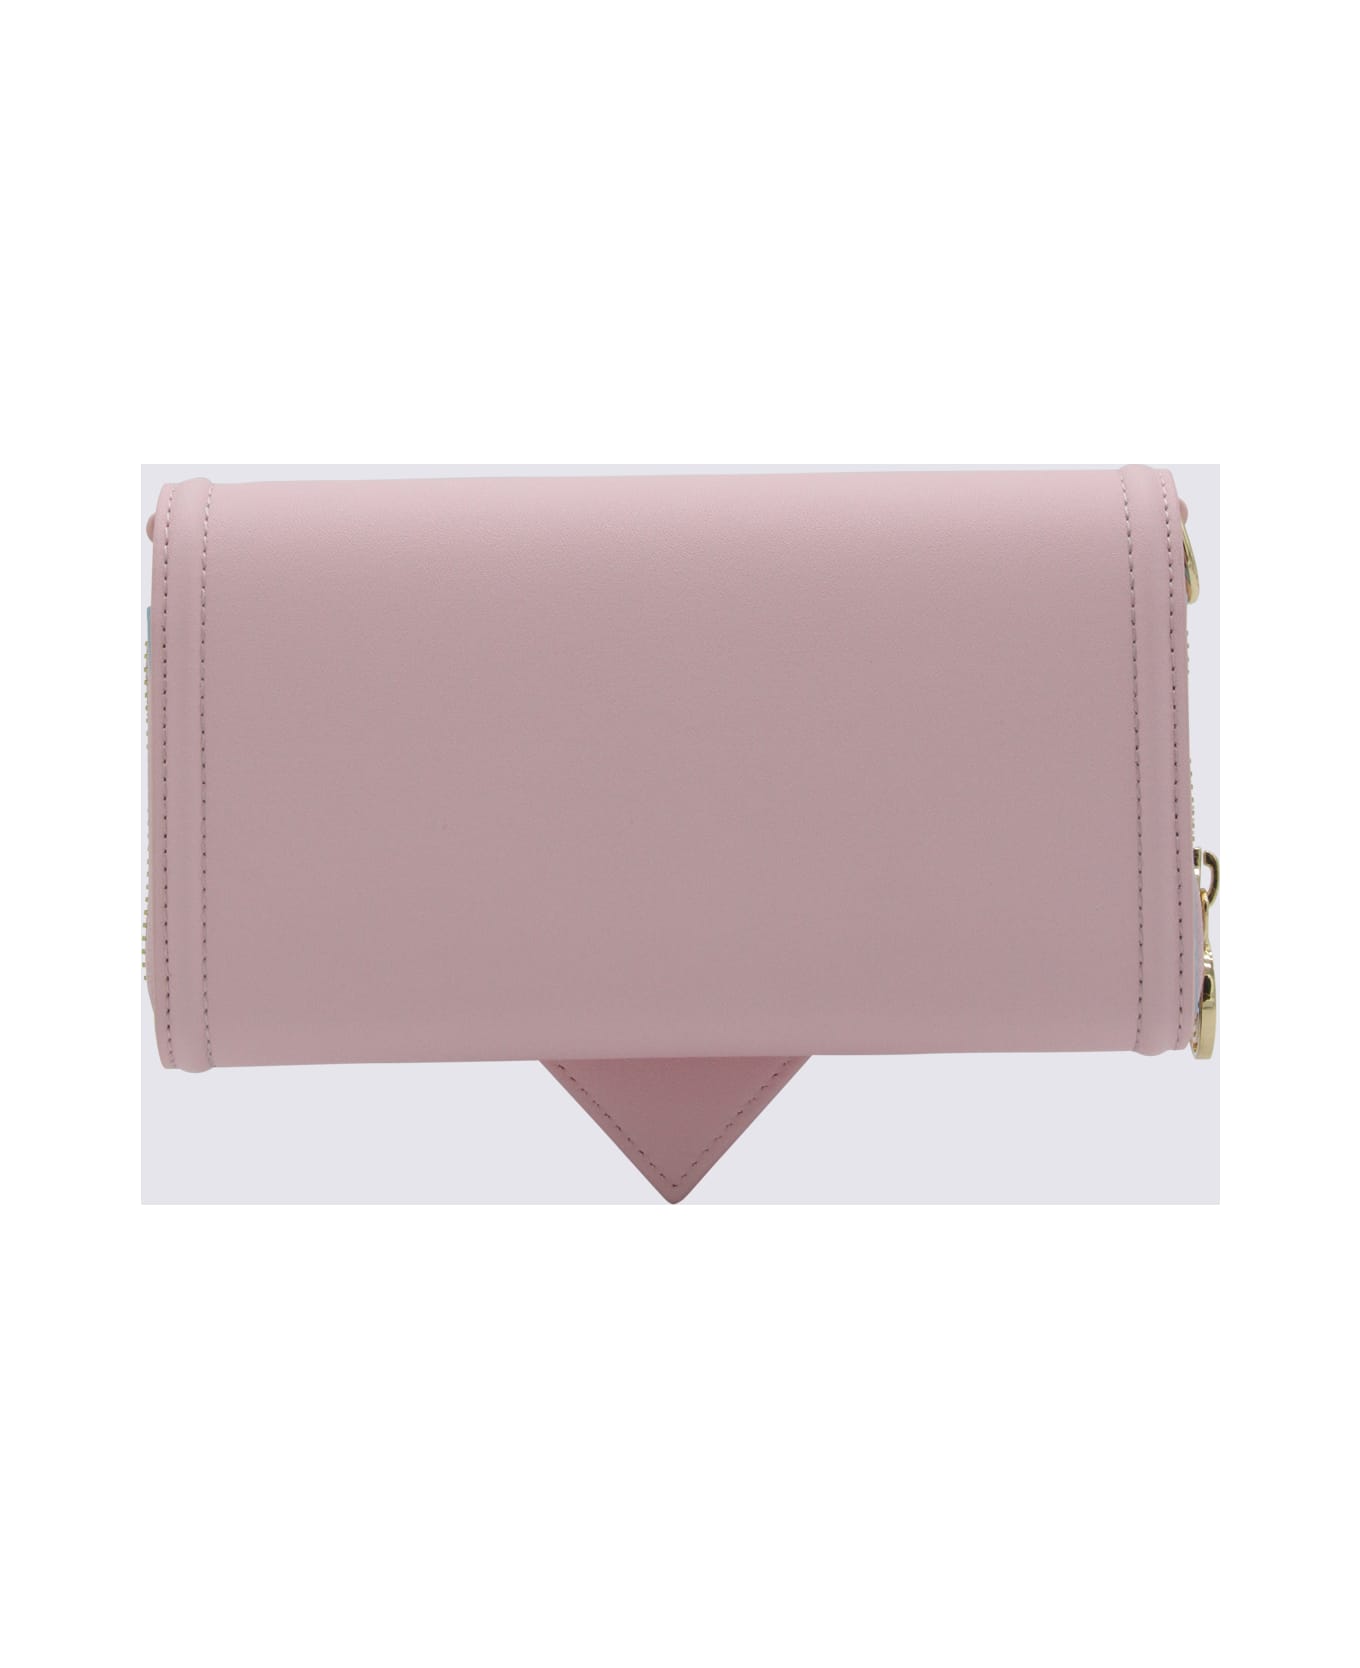 Chiara Ferragni Pink Crossbody Bag - FAIRY TALE